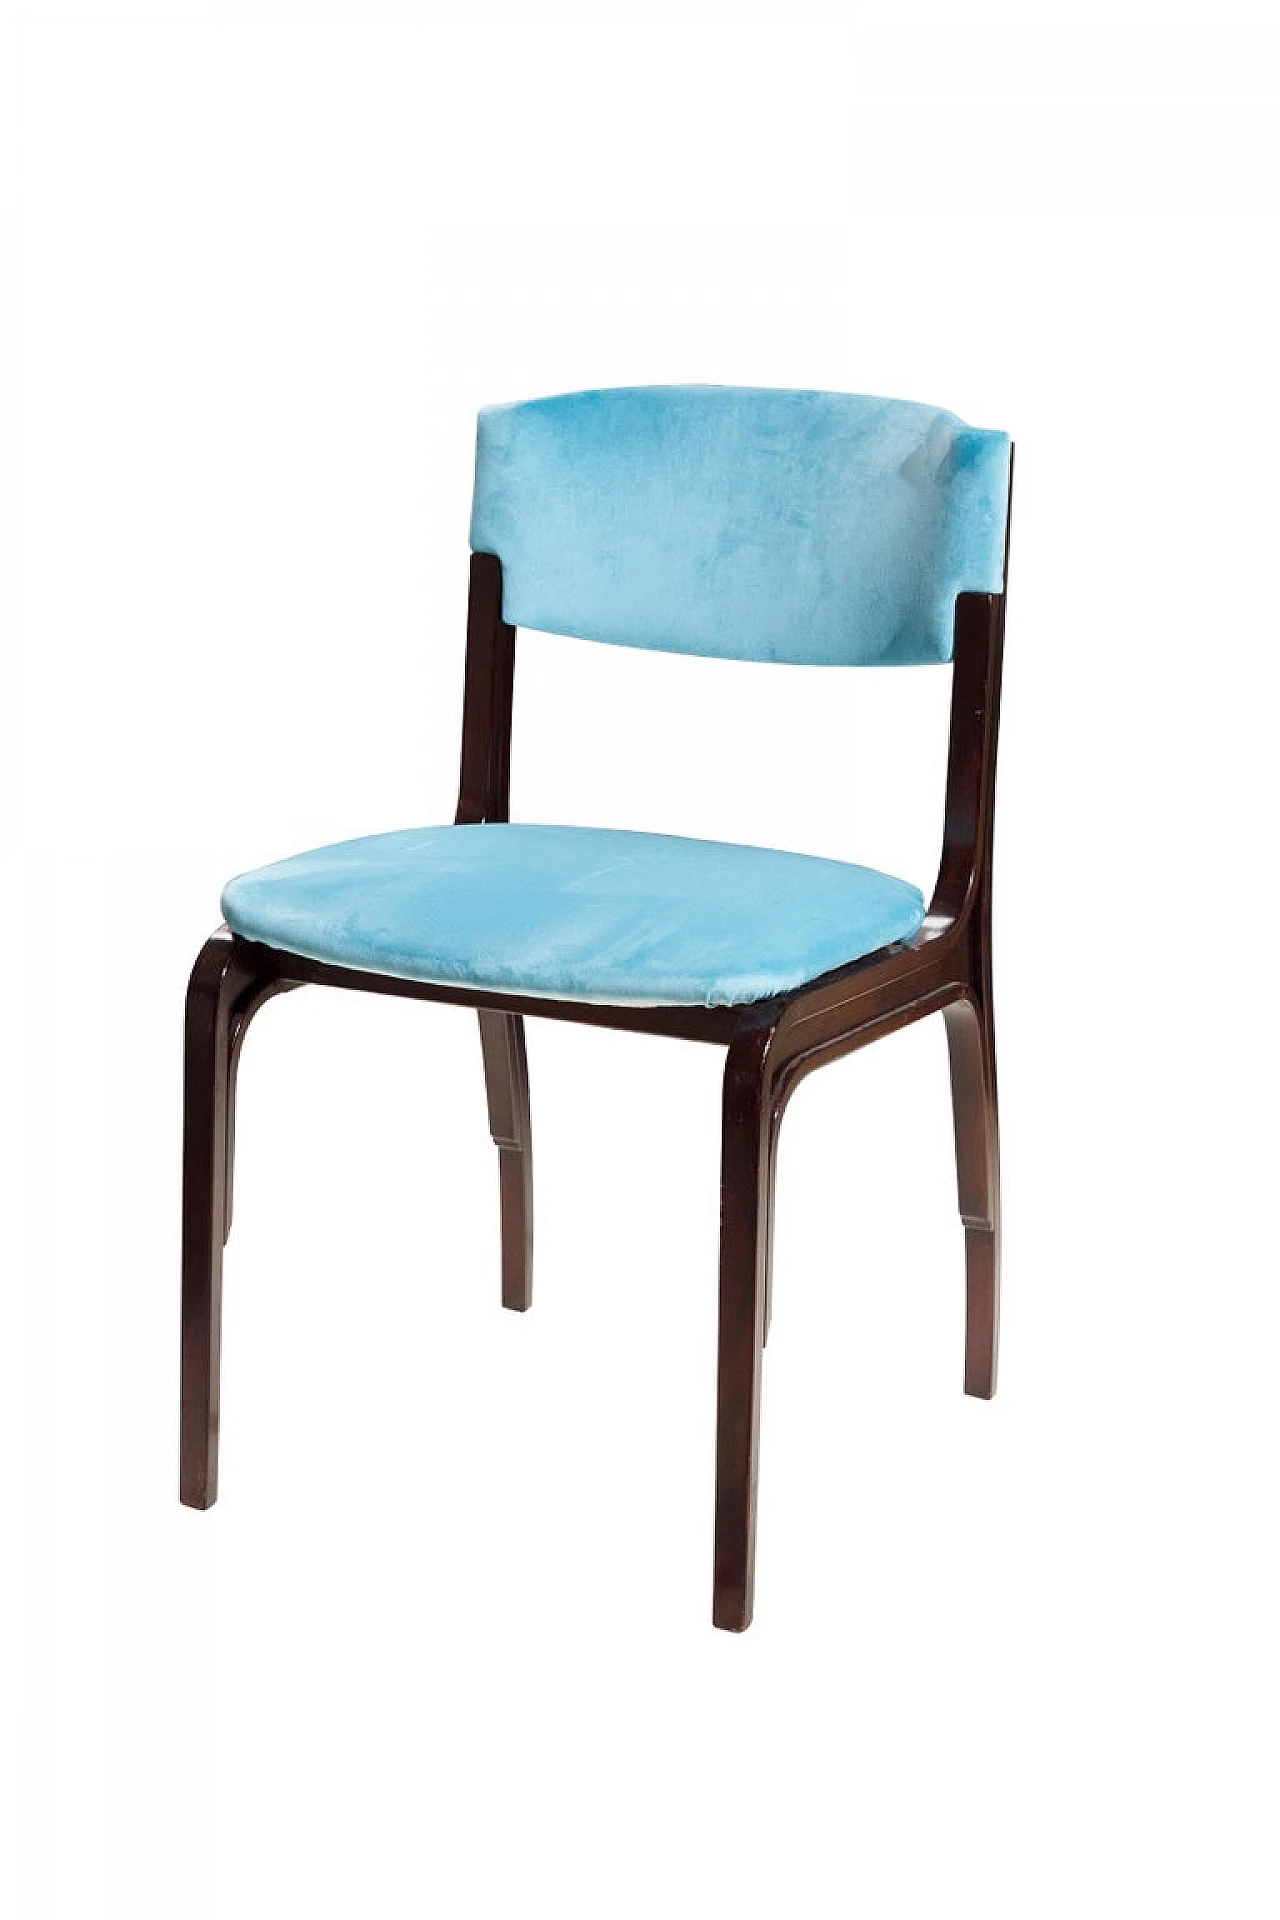 5 Chairs by Gianfranco Frattini for Cantieri Carugati, 1960s 3